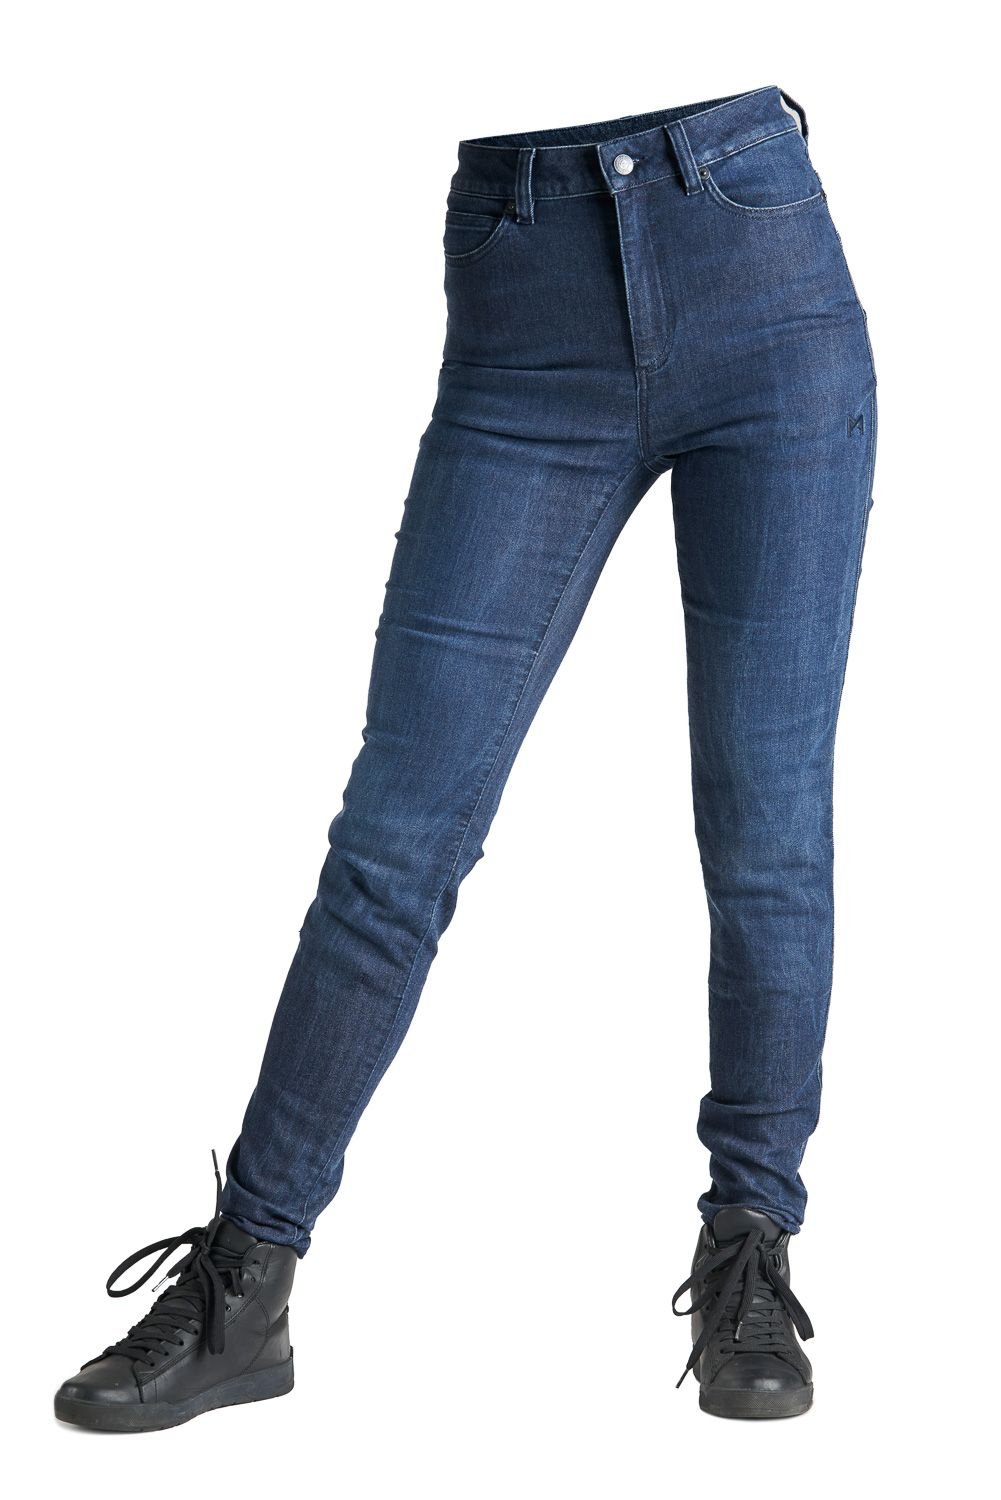 Image of Pando Moto Kusari Cor 02 Women Motorcycle Jeans Skinny-Fit Cordura Size W26/L30 ID 7851049503990